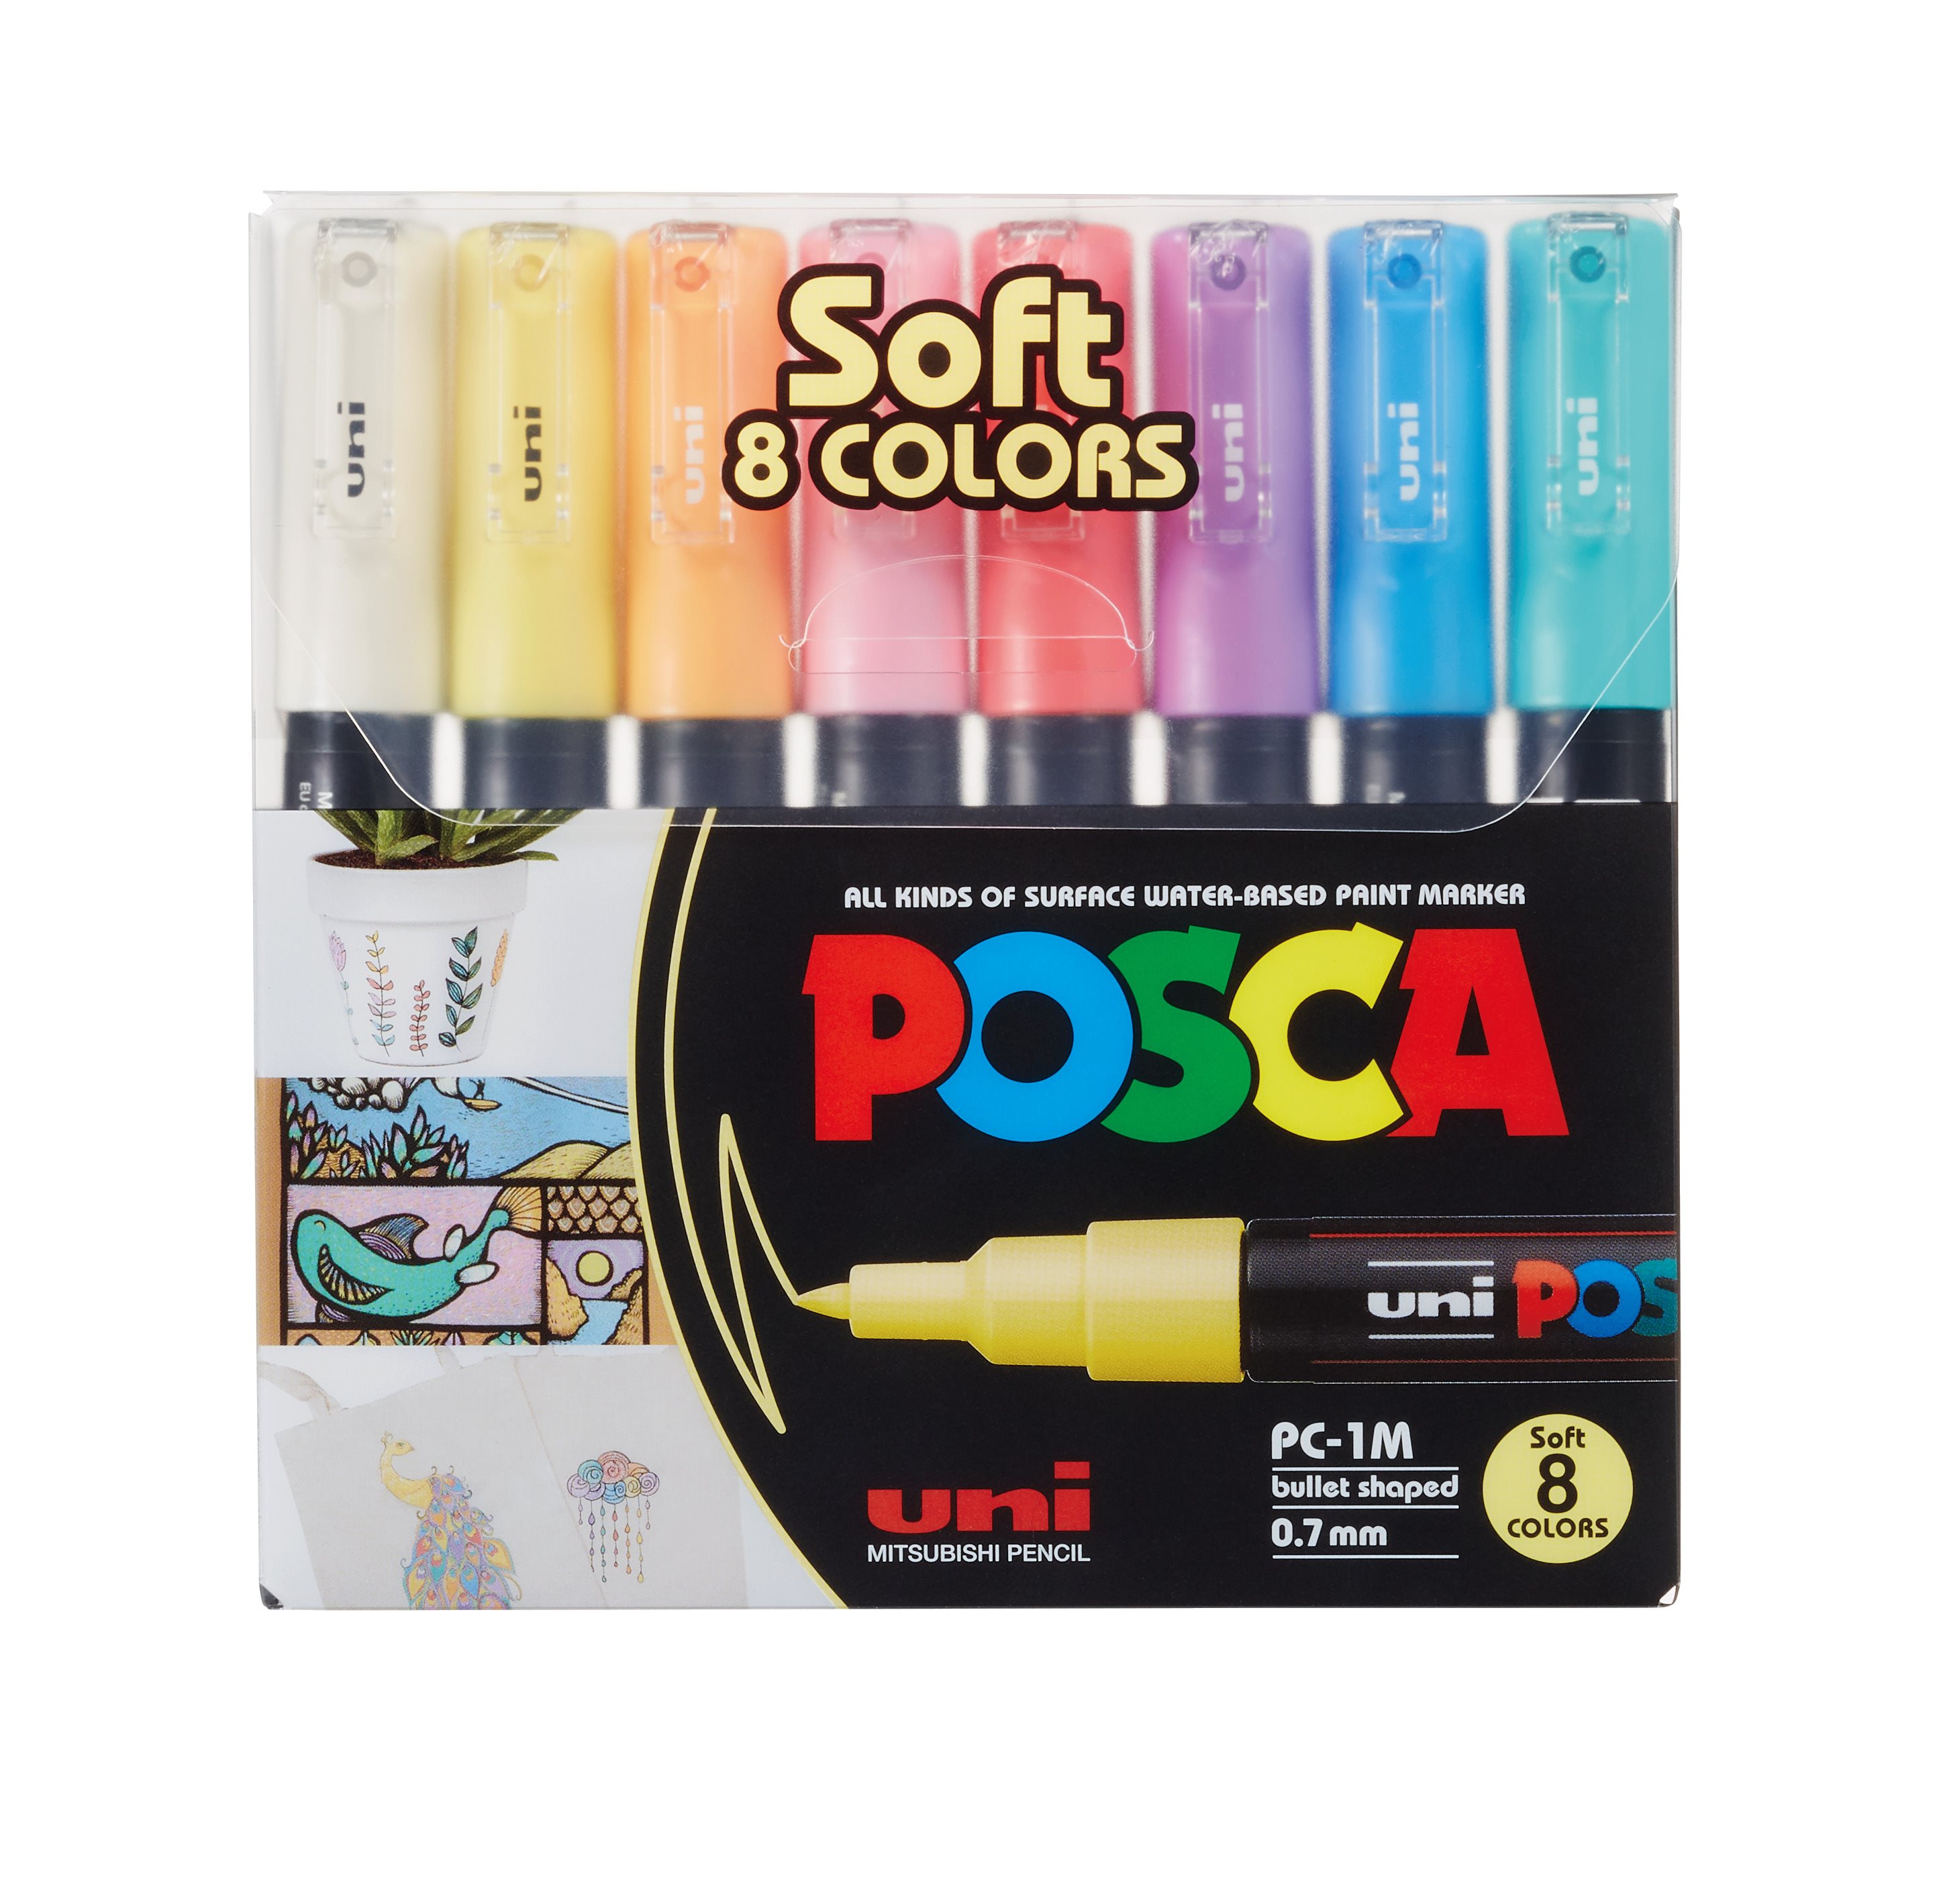 Posca - PC1MC - Extra Fine Bullet Tip Pen - Soft Colors, 8 pc - Leker